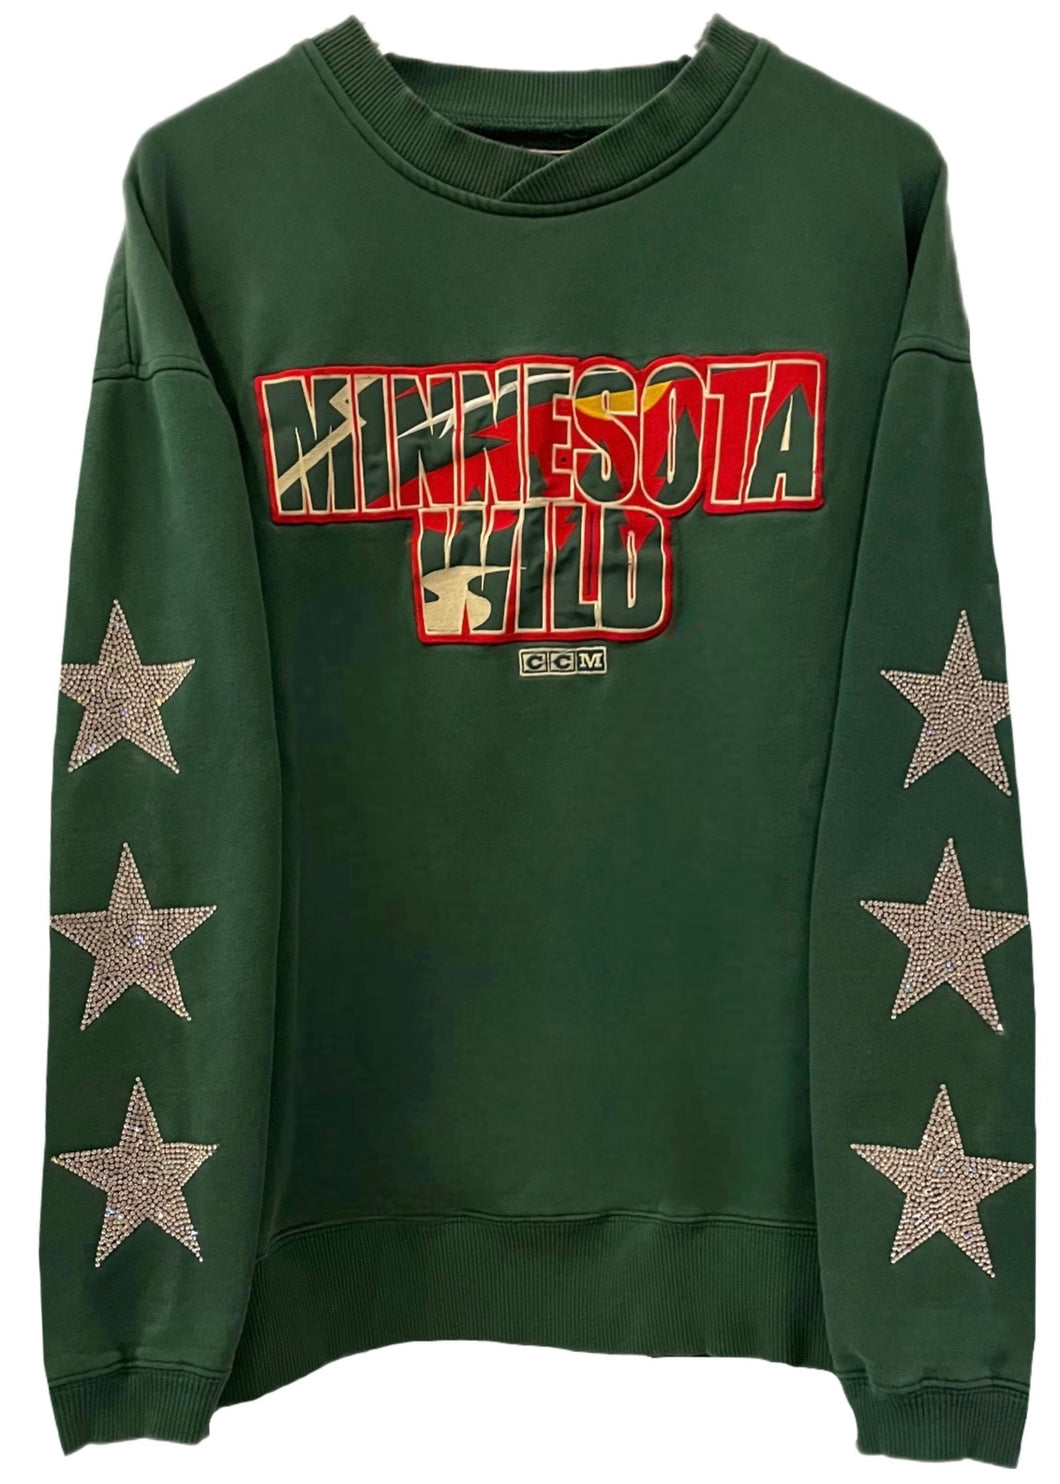 Minnesota Wild, NHL One of a KIND Vintage Sweatshirt with Crystal Star Design